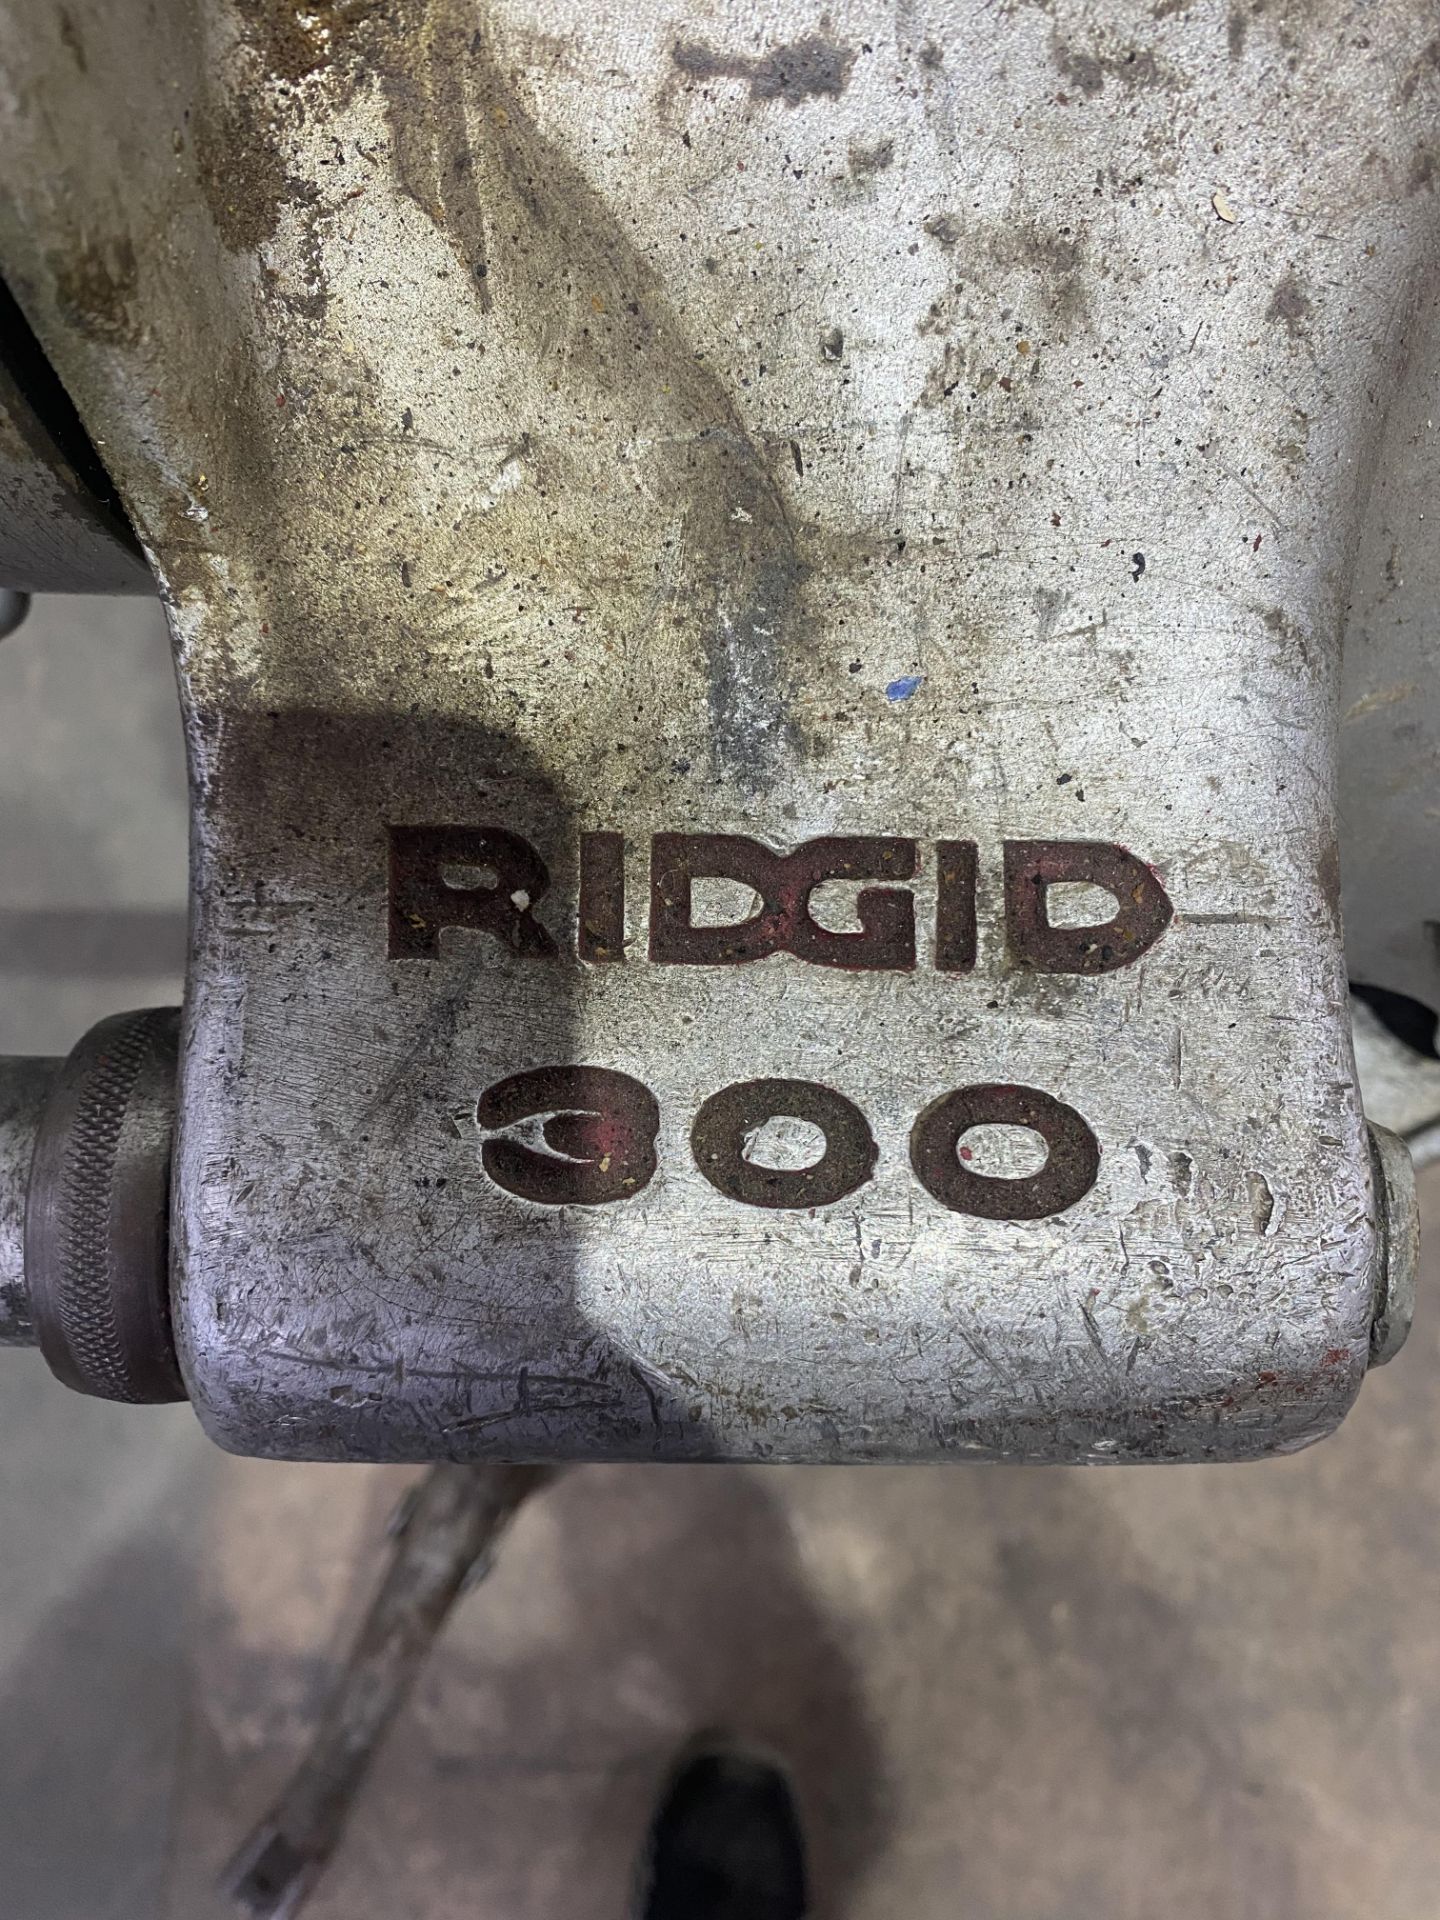 Ridgid 300 Pipe Threading Machine 110v With Tri-Stand - Image 10 of 13